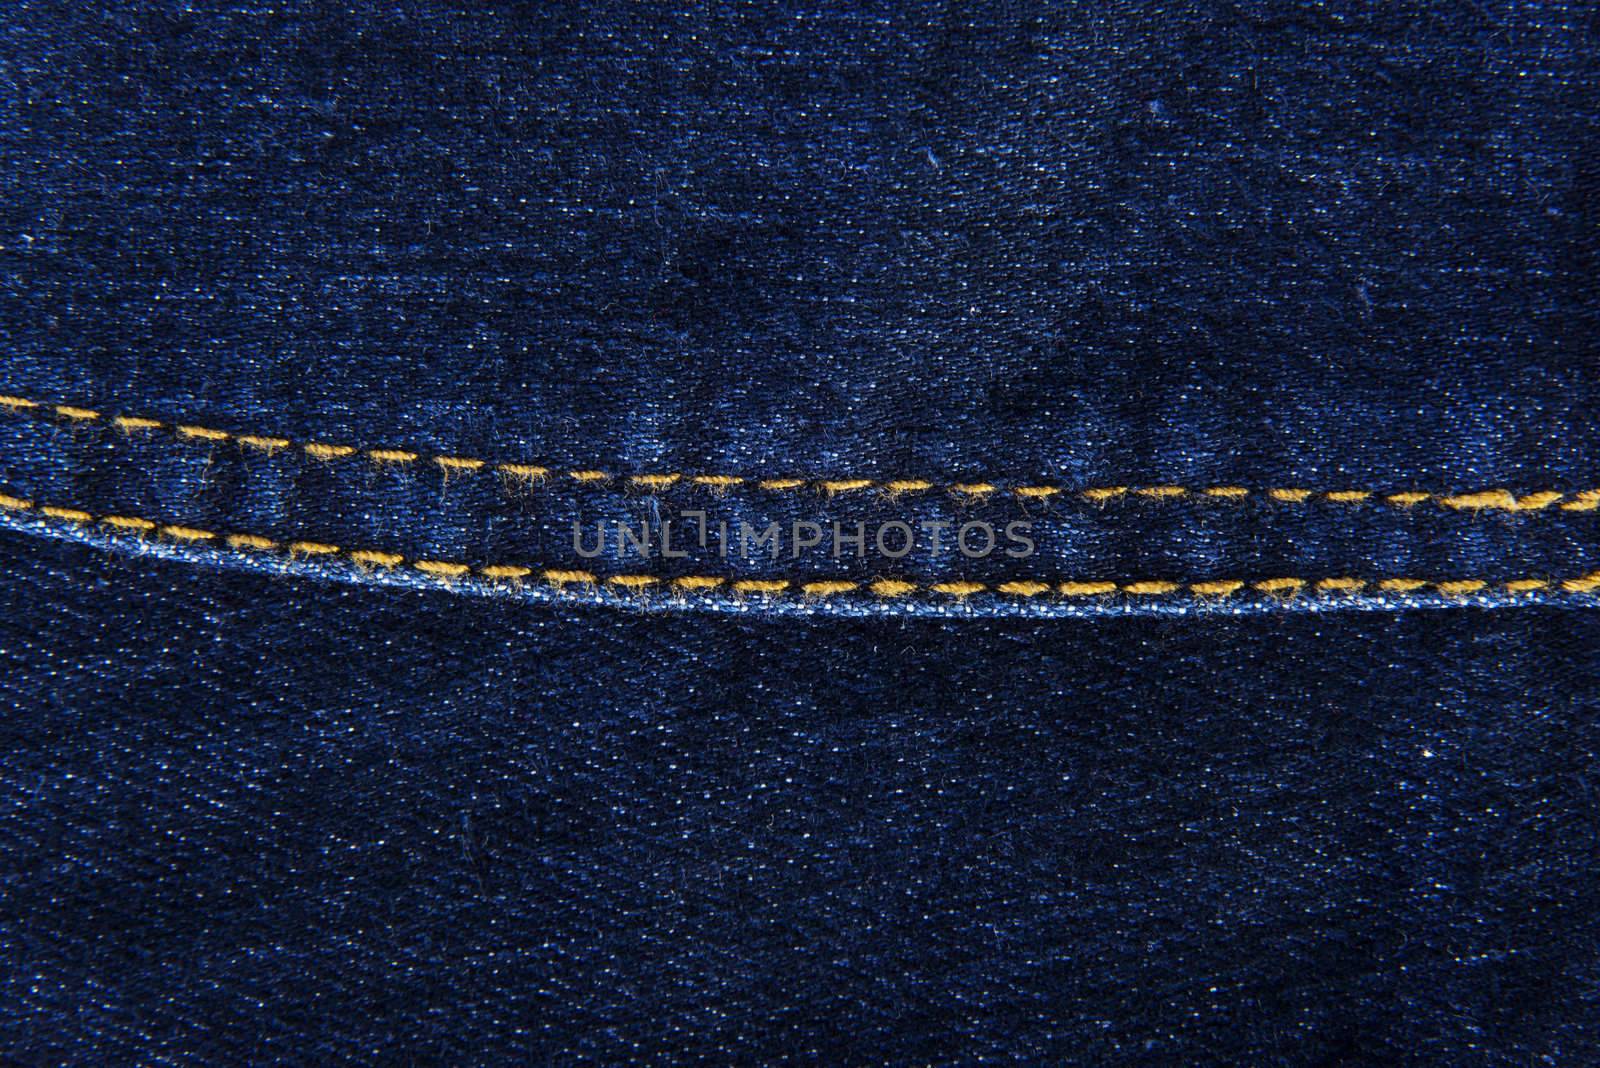 Jeans closeup by BDS